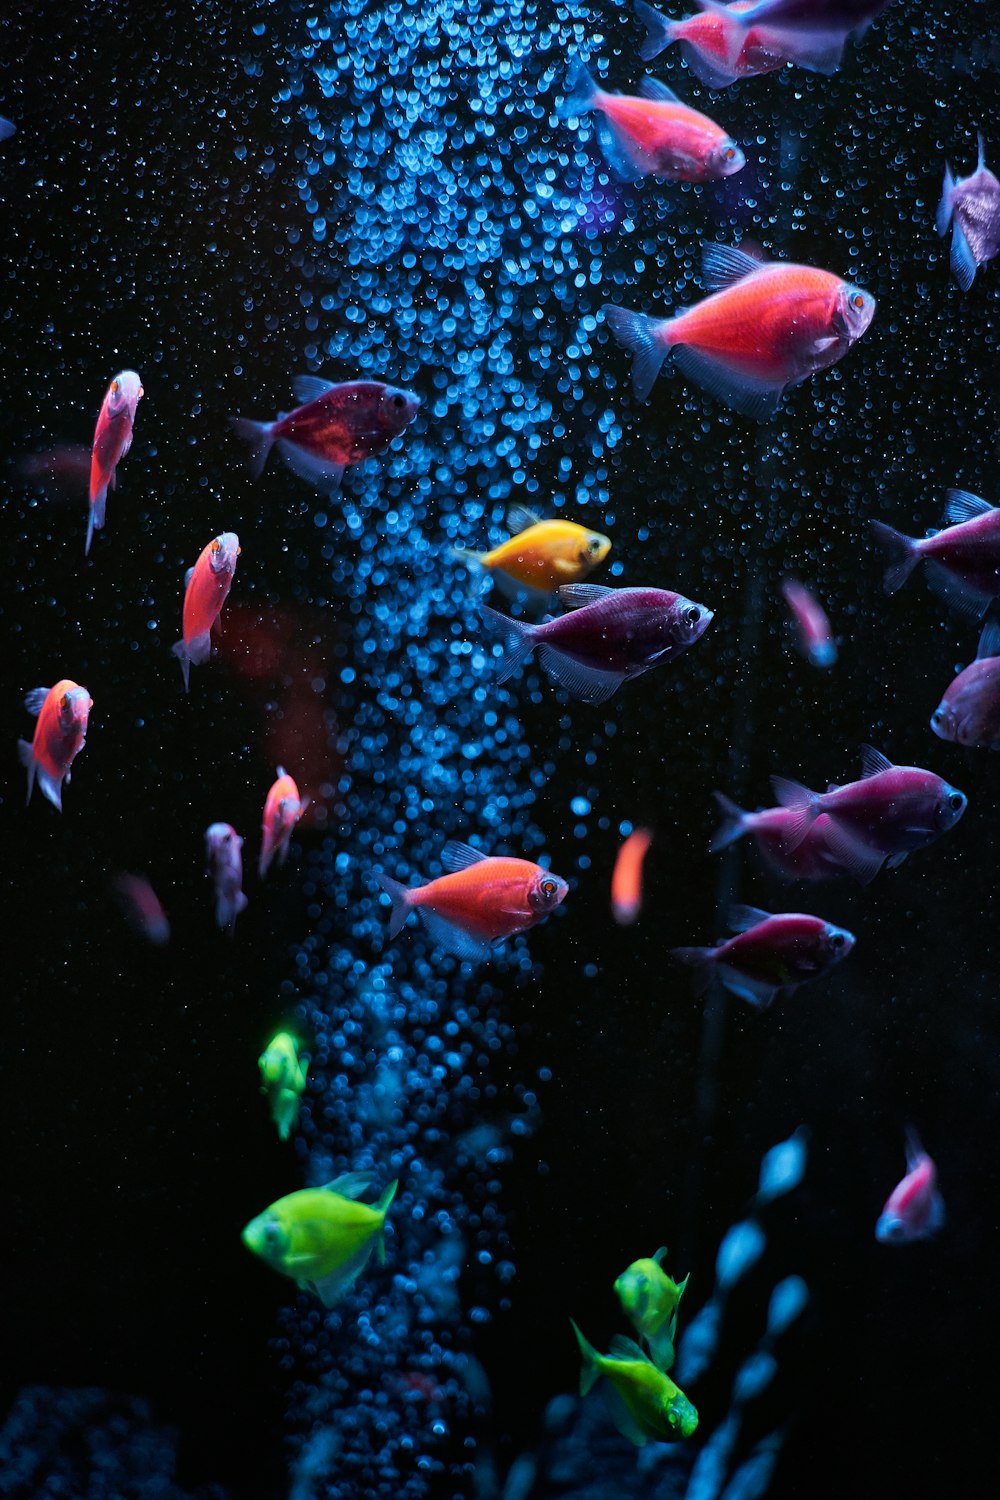 750+ Aquarium Pictures [HD] | Download Free Images on Unsplash